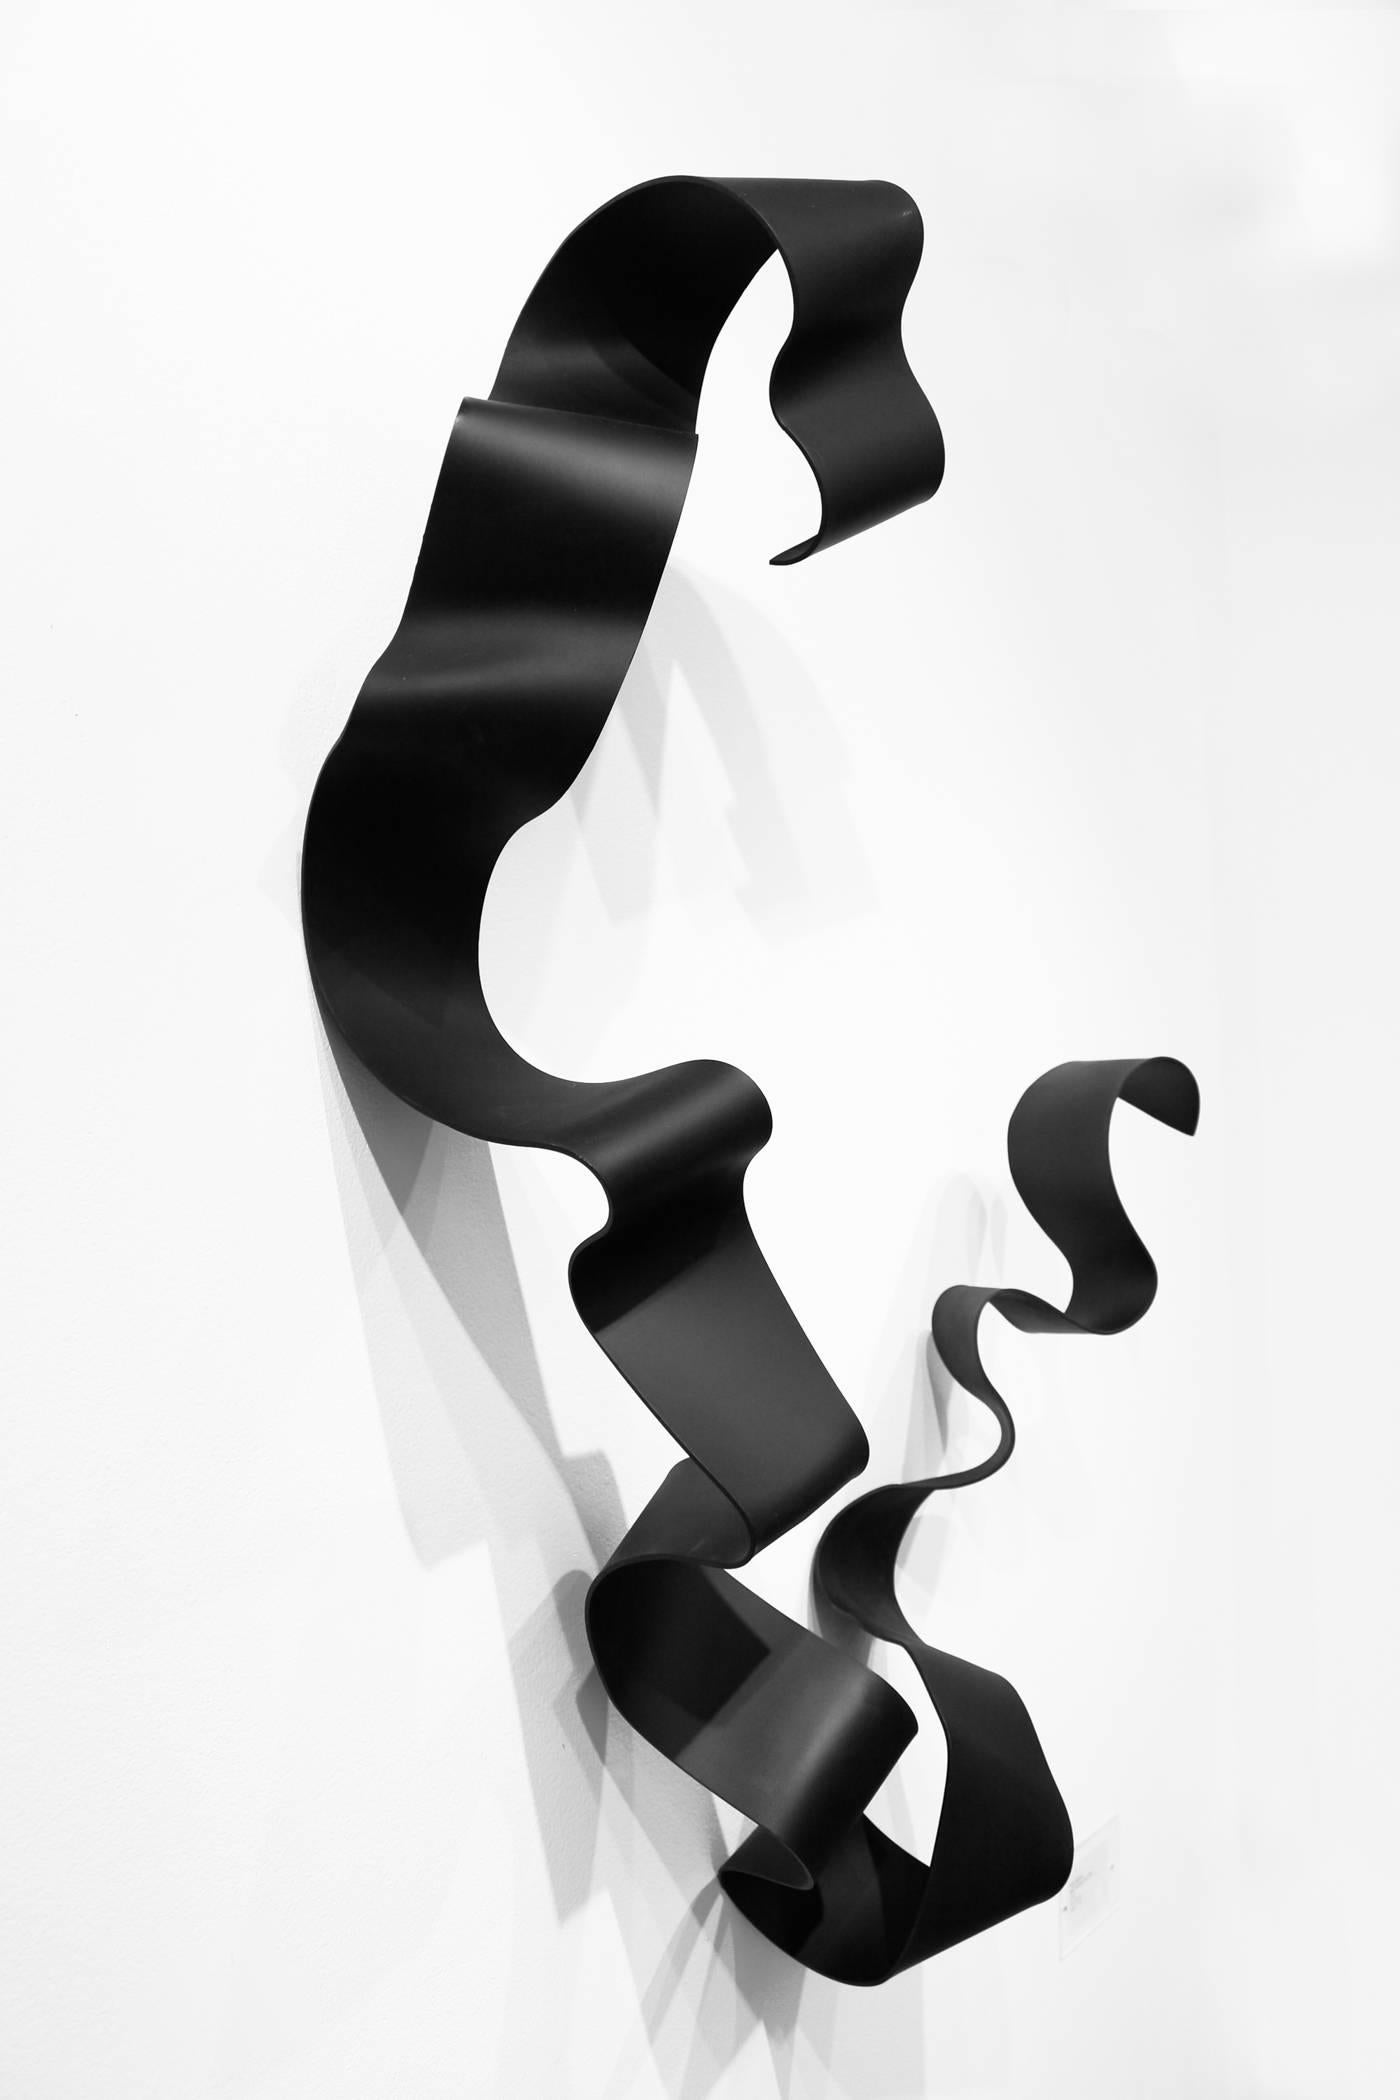 Belt, Flat Black #6 - Contemporary Sculpture by Mark Birksted